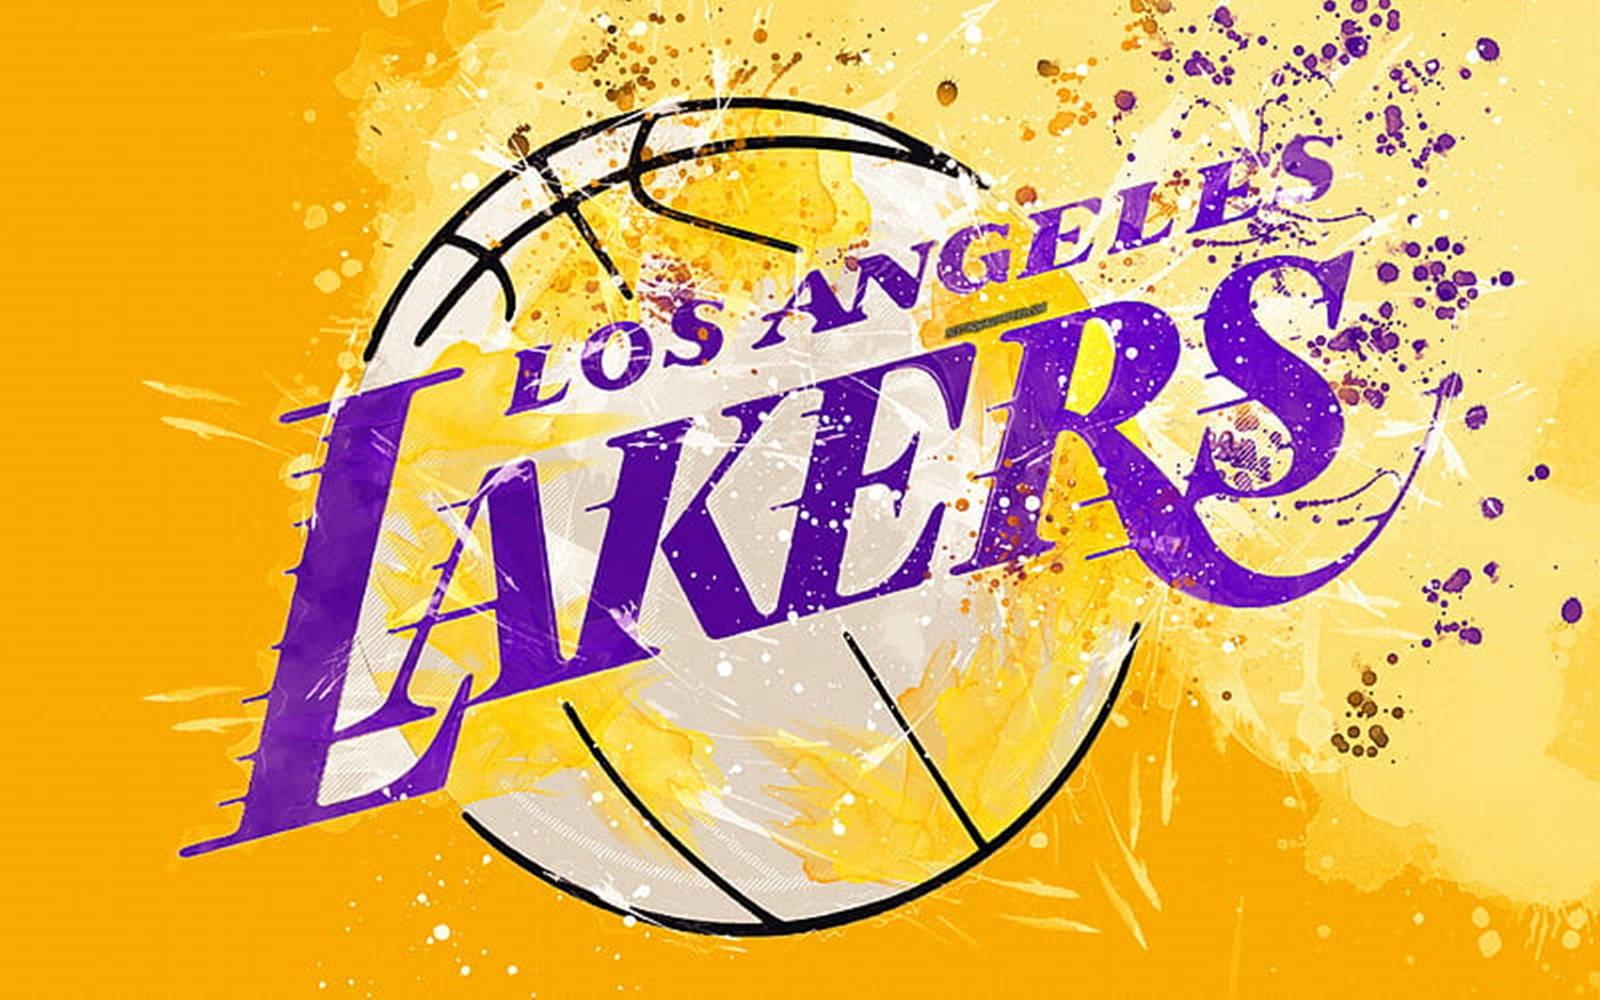 Free Lakers Logo Wallpaper Downloads, Lakers Logo Wallpaper for FREE